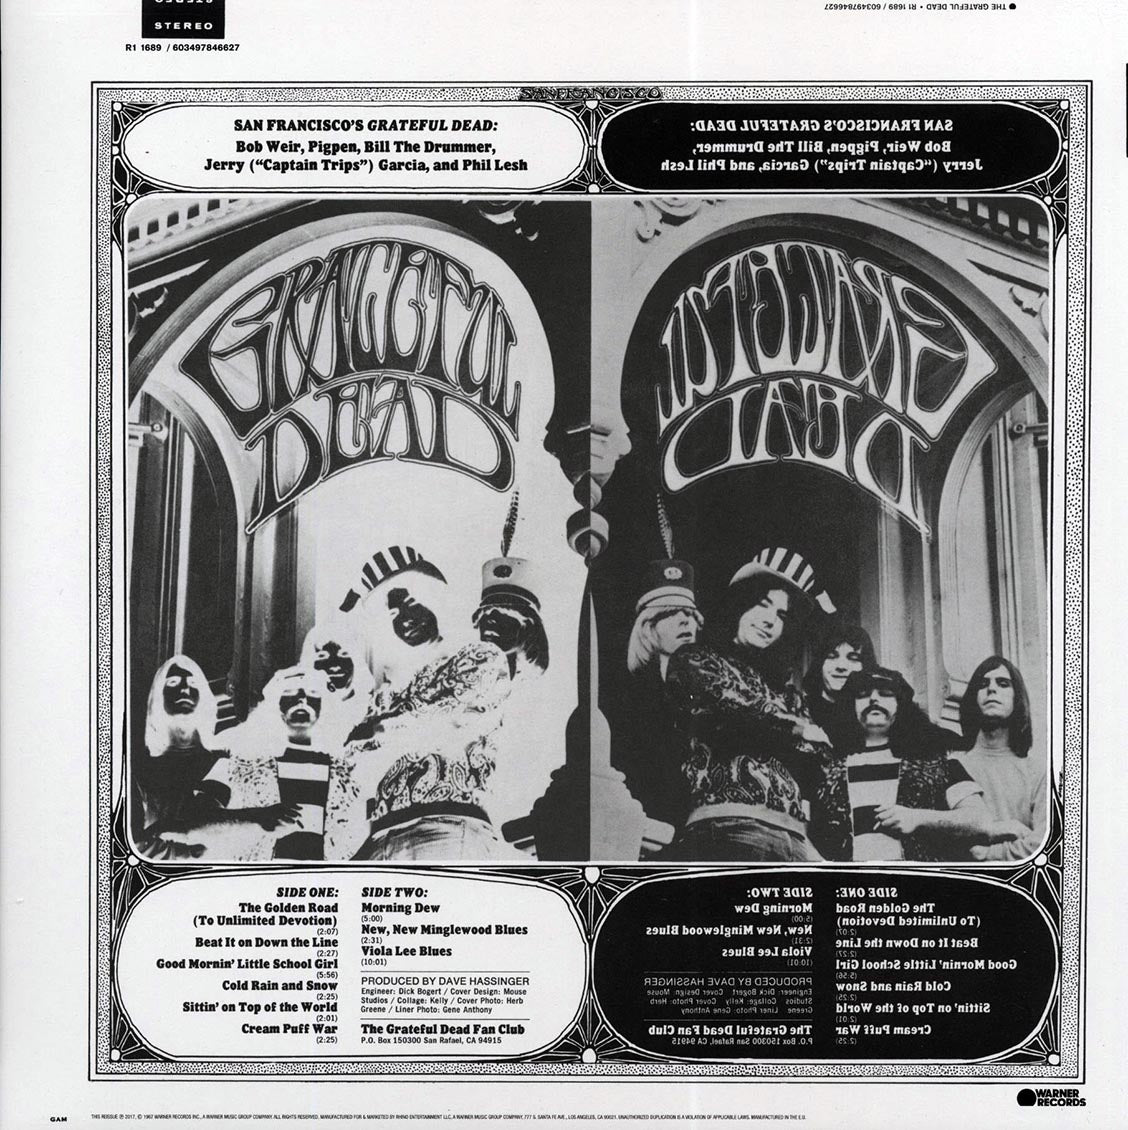 Grateful Dead - The Grateful Dead (50th Anniv. Ed.) (stereo) (180g) (remastered) - Vinyl LP, LP